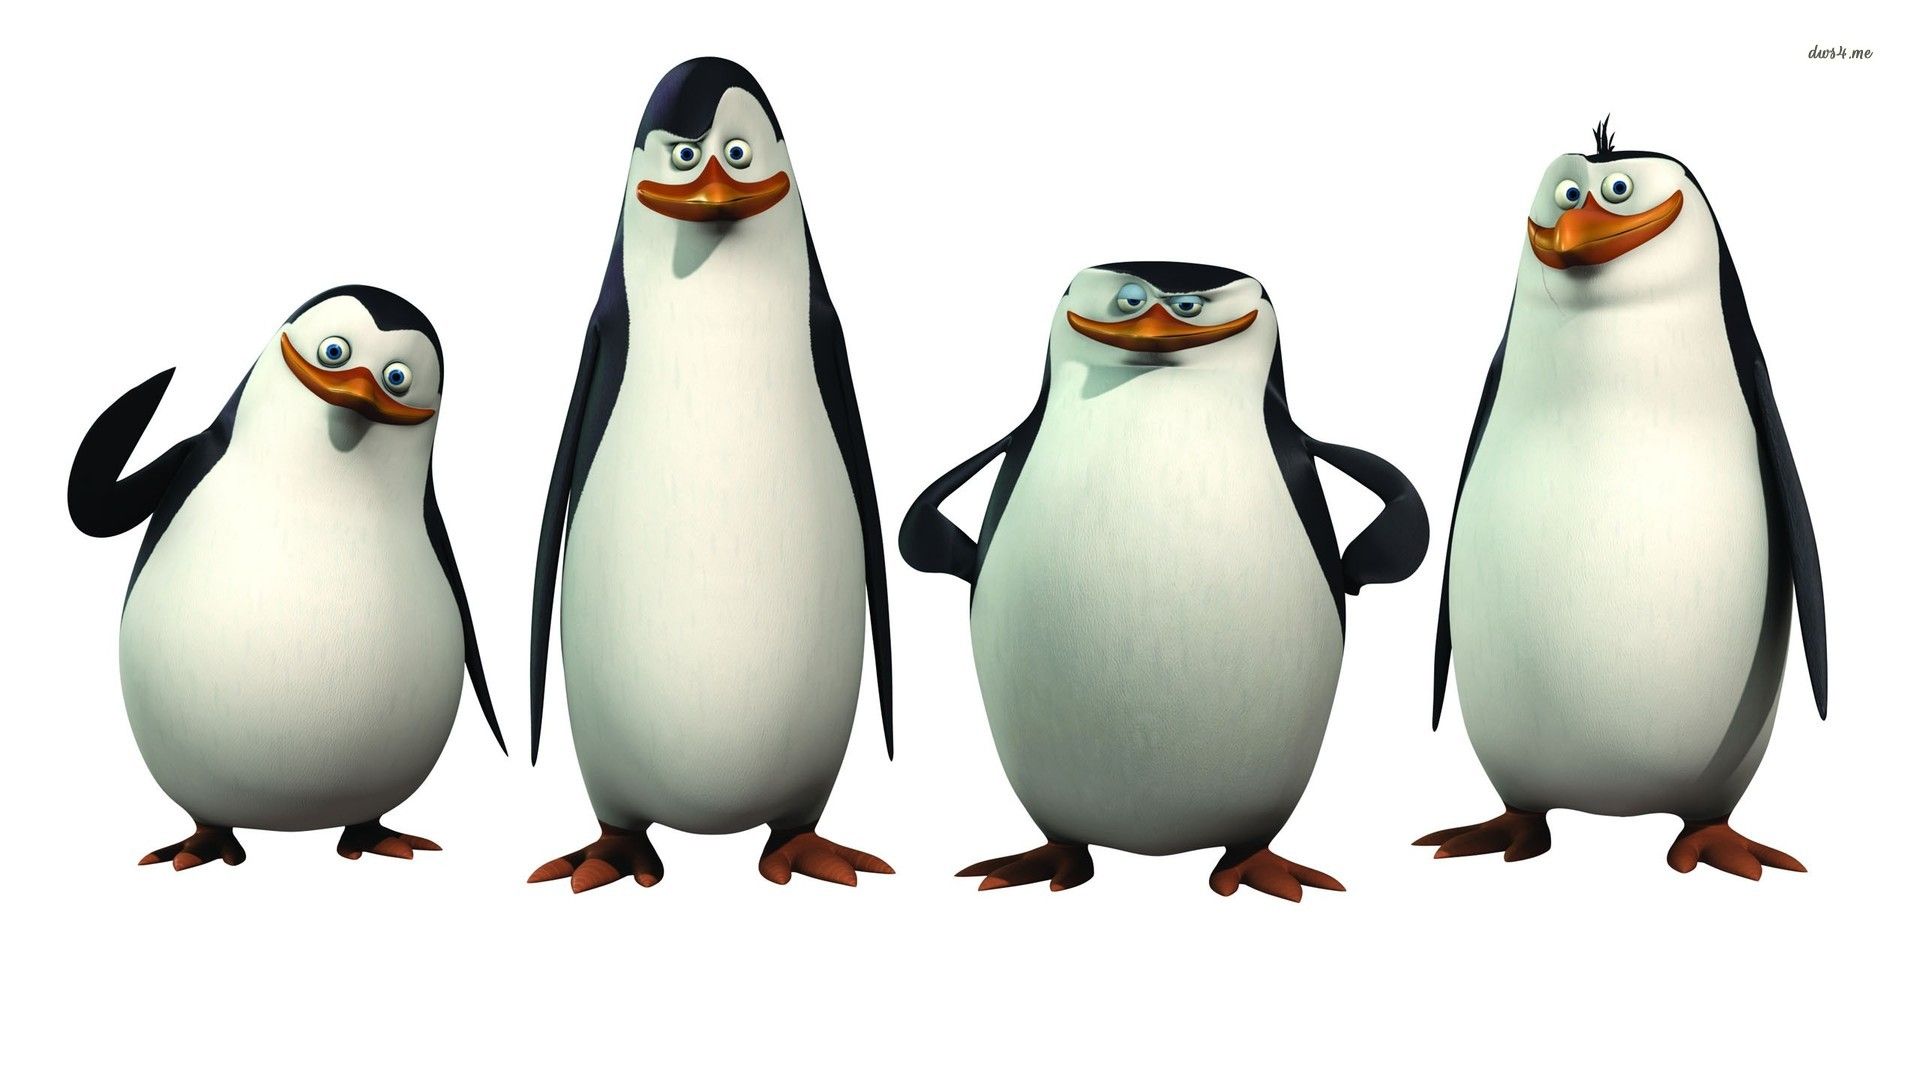 Penguins Of Madagascar wallpaper, Movie, HQ Penguins Of Madagascar pictureK Wallpaper 2019